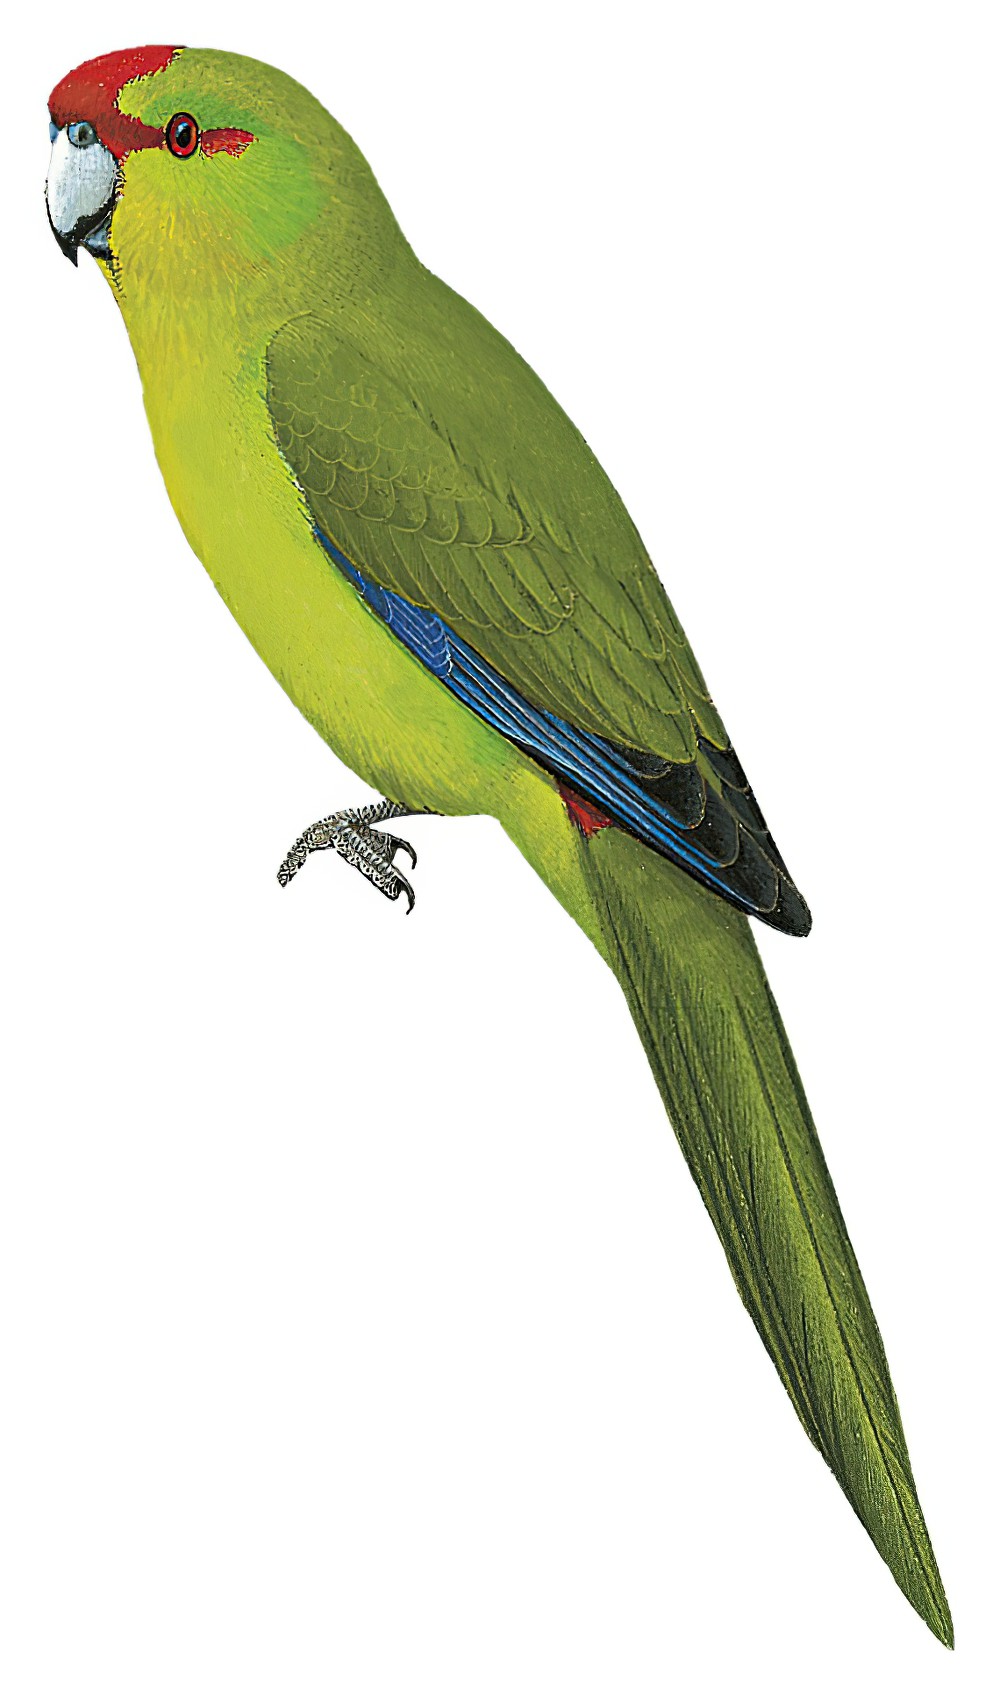 New Caledonian Parakeet / Cyanoramphus saisseti